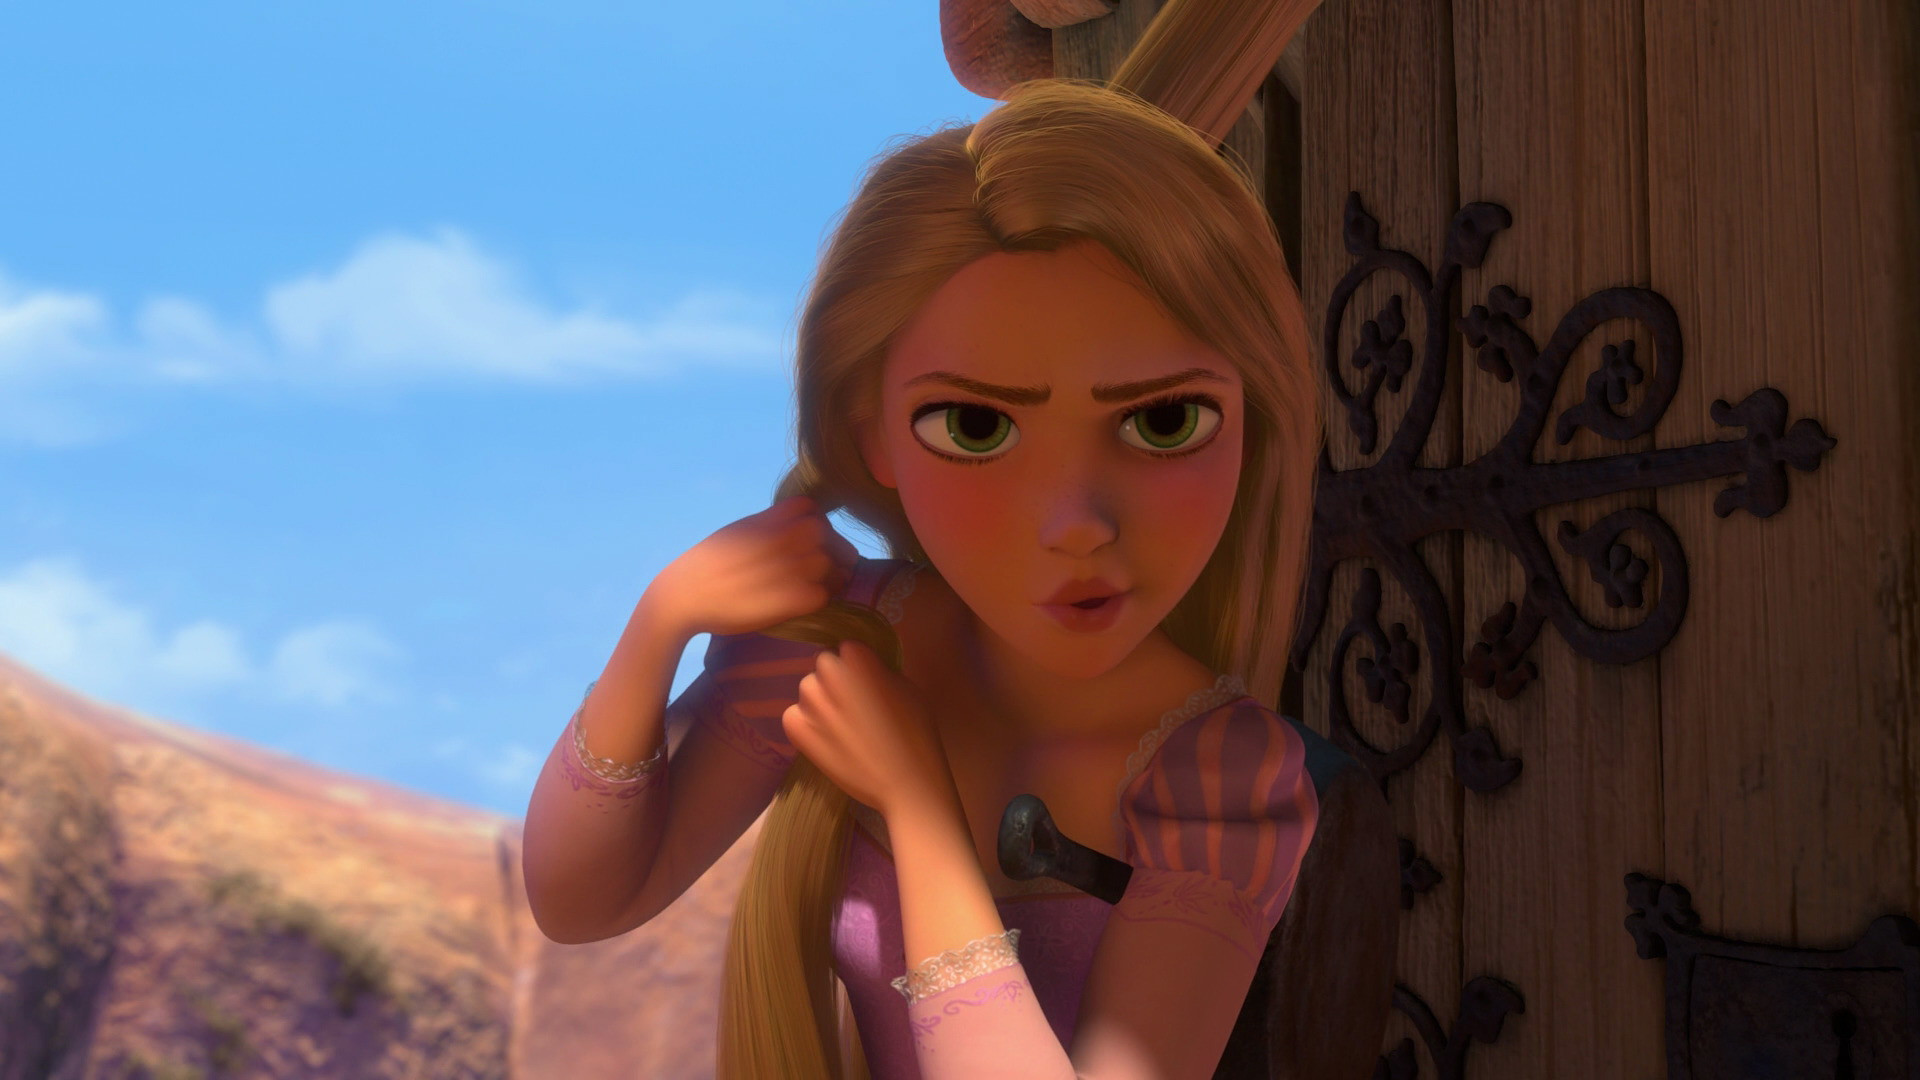 Rapunzel of Disney Princesses images Rapunzel – My Life Begin HD wallpaper and background photos